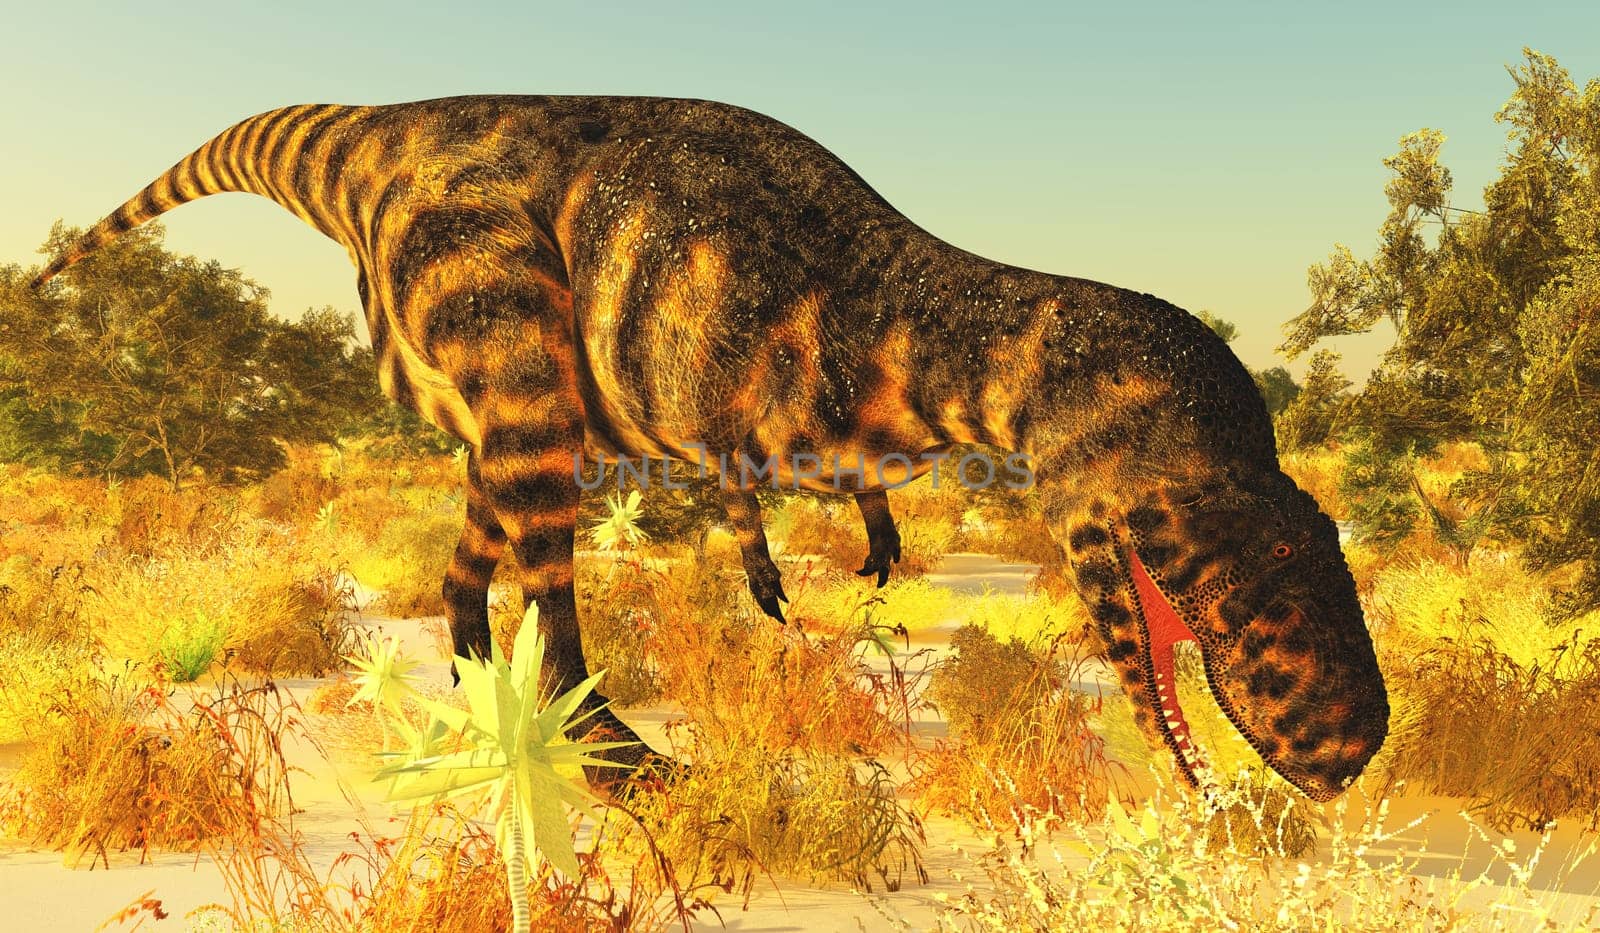 Abelisaurus Tracking Prey by Catmando